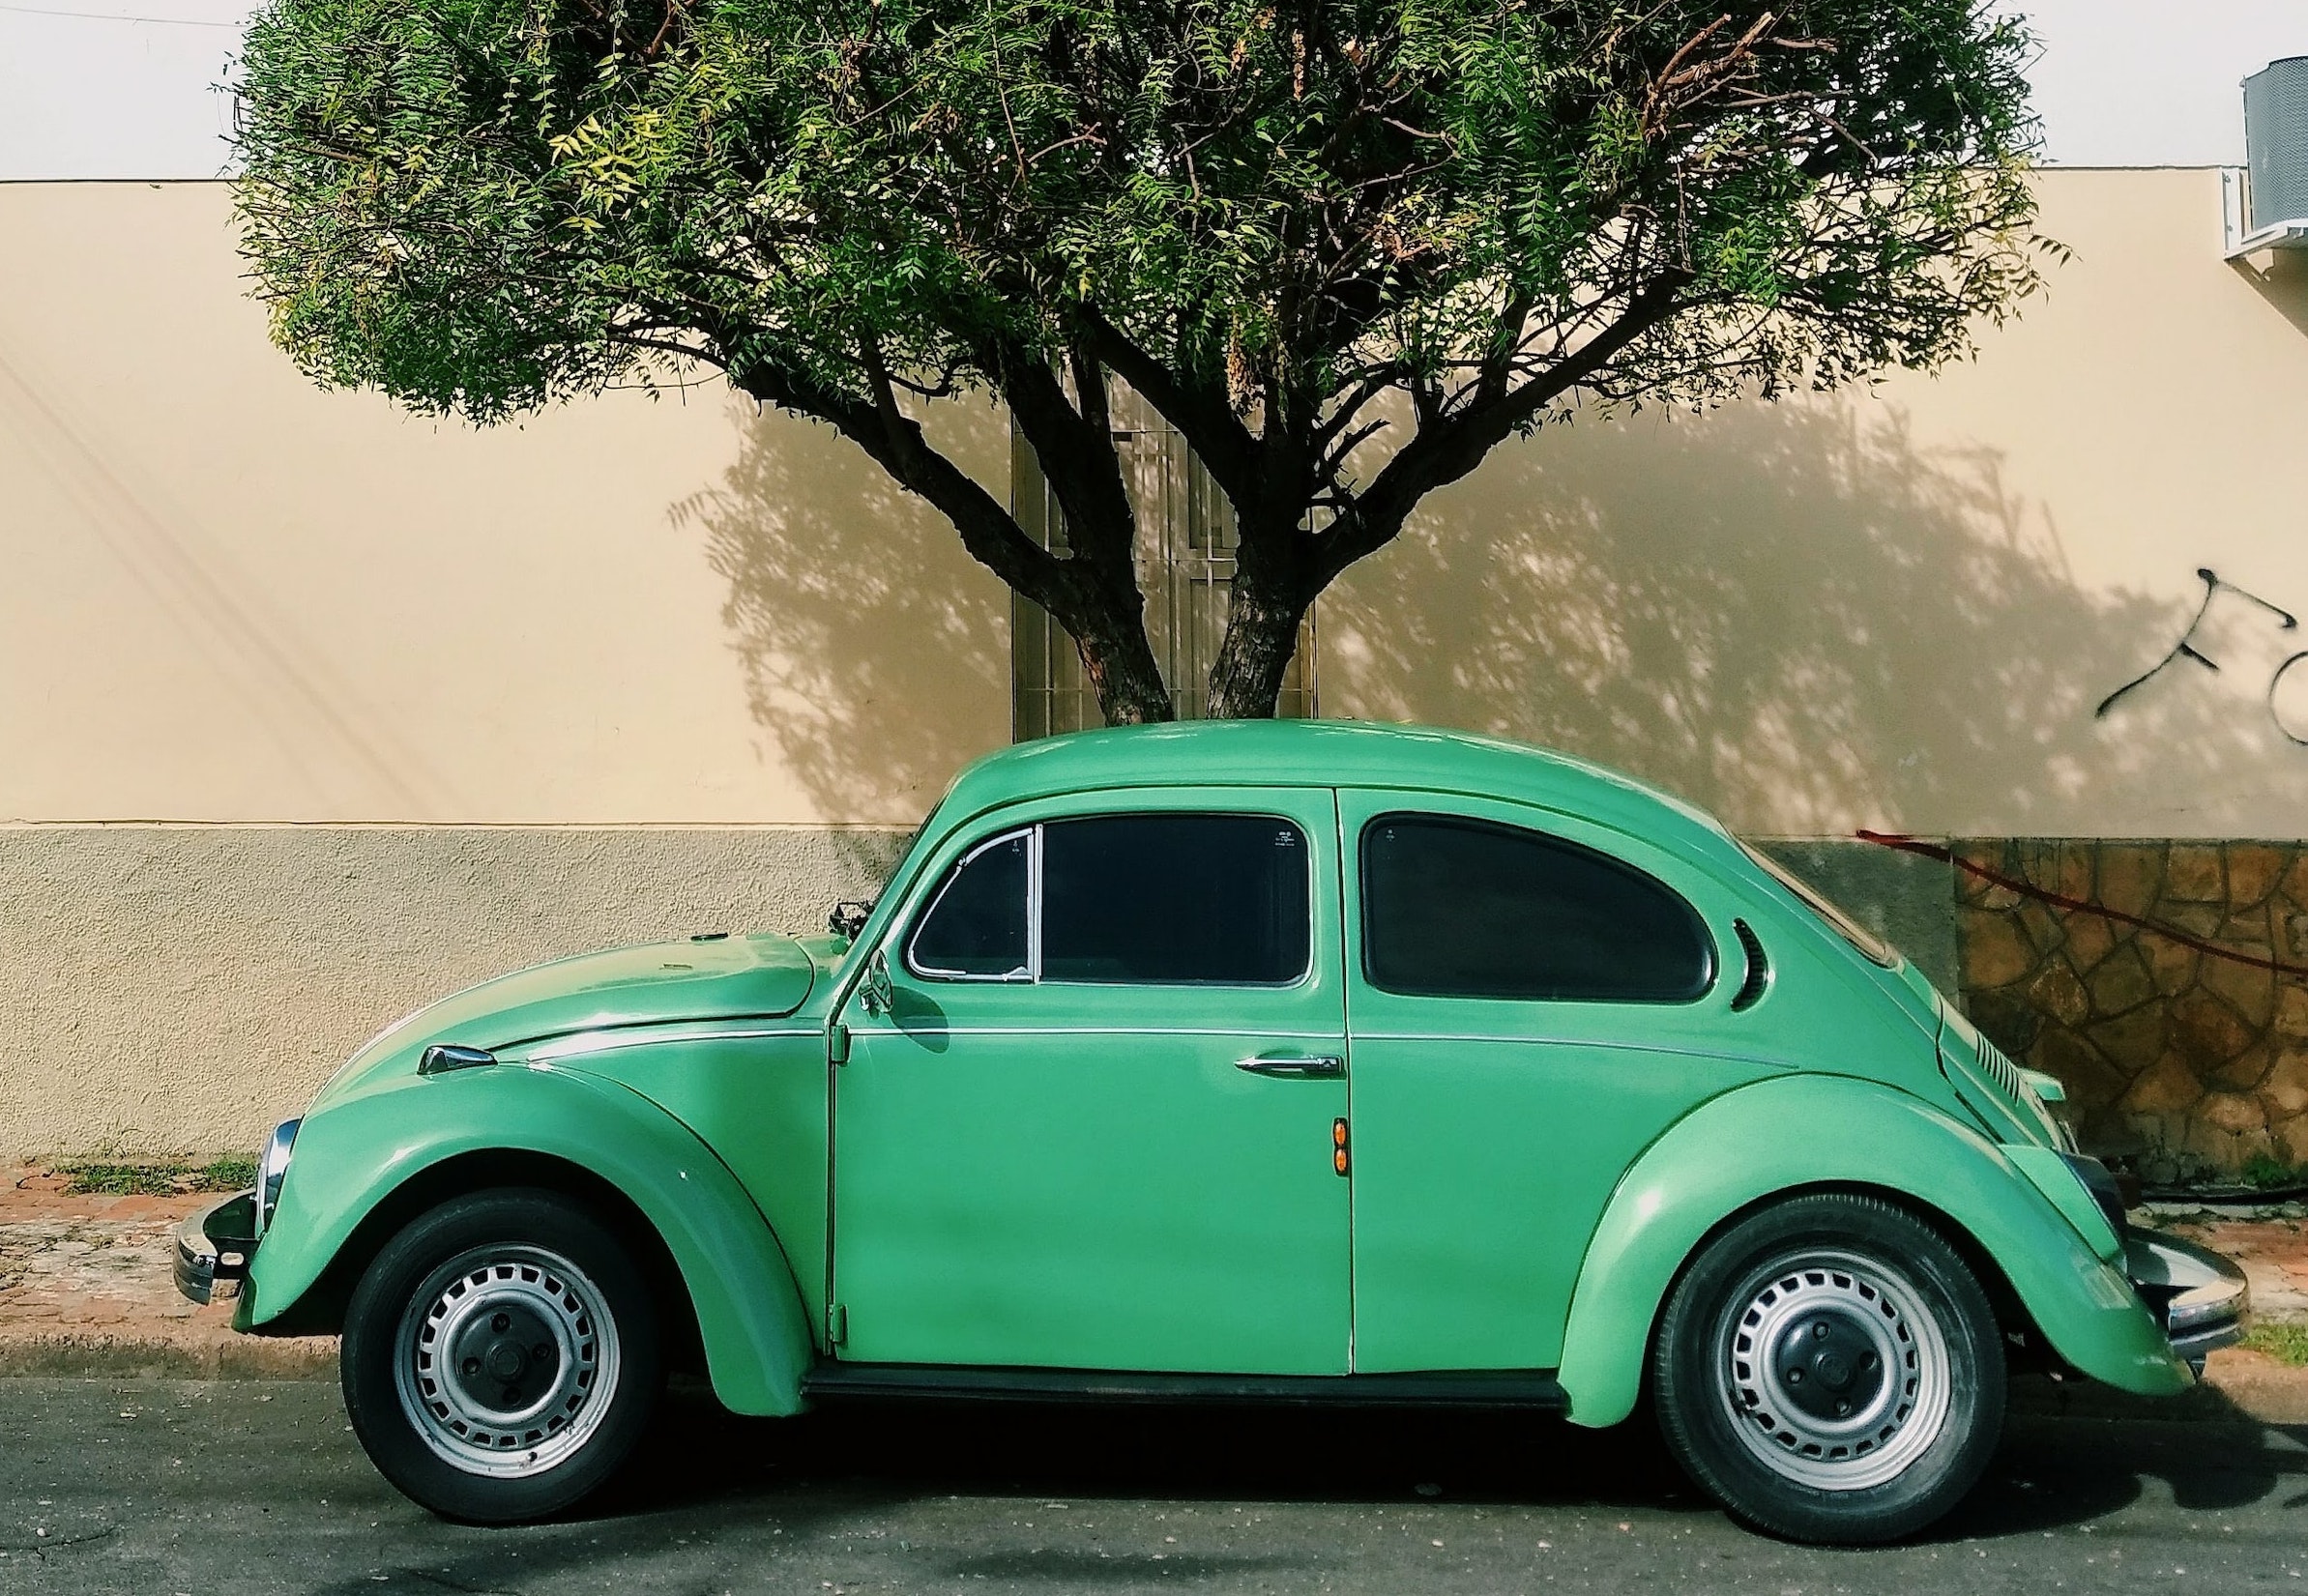 A green VW beetle